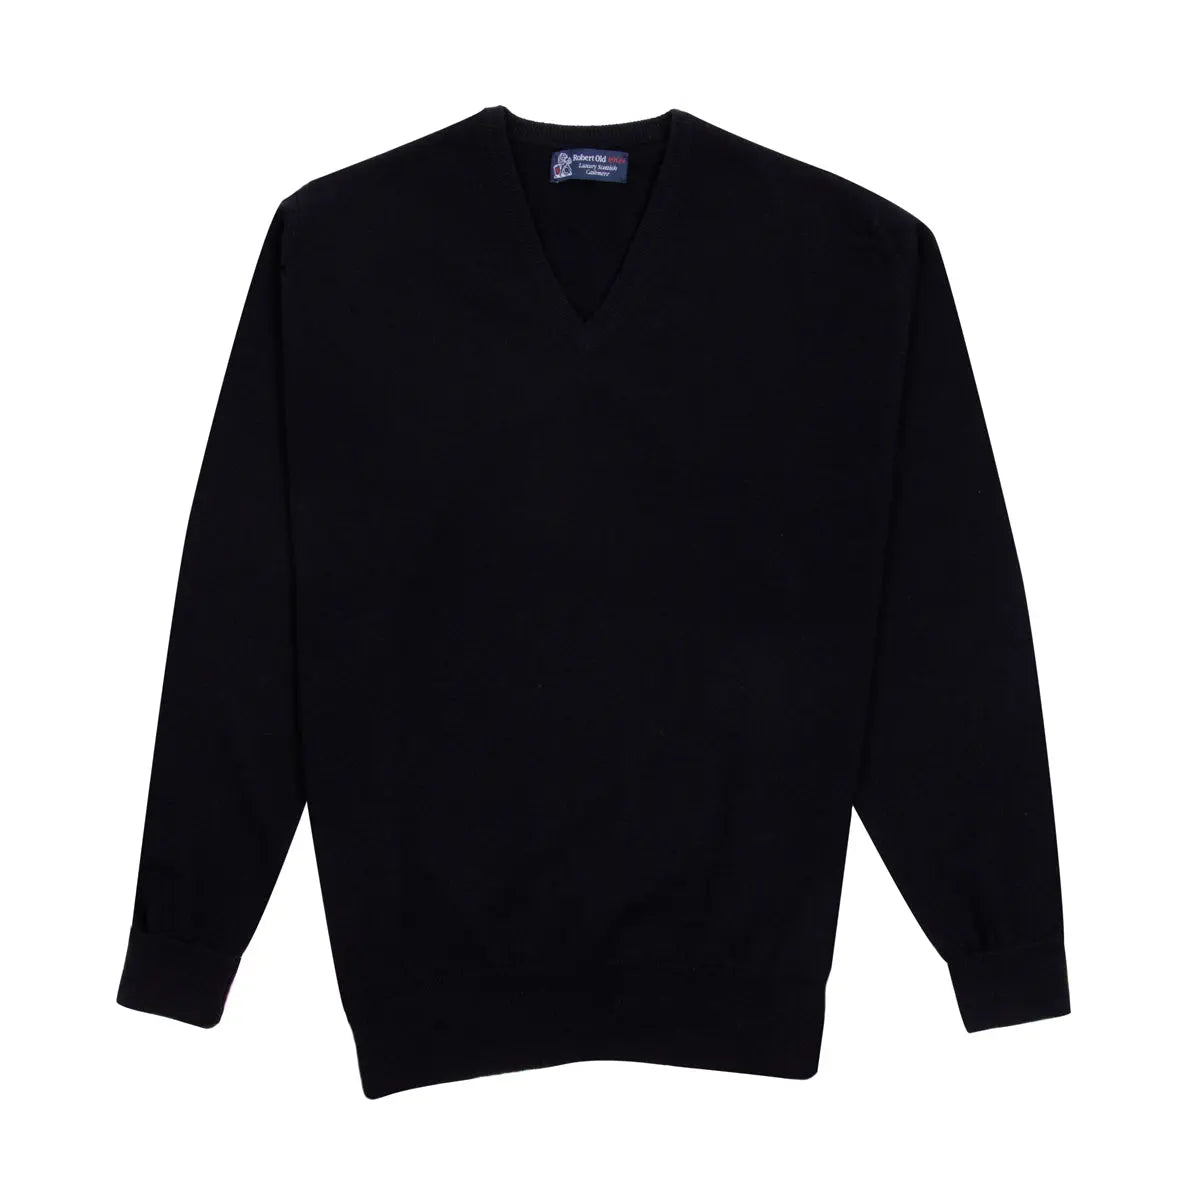 Black Chatsworth 2ply V-Neck Cashmere Sweater Robert Old